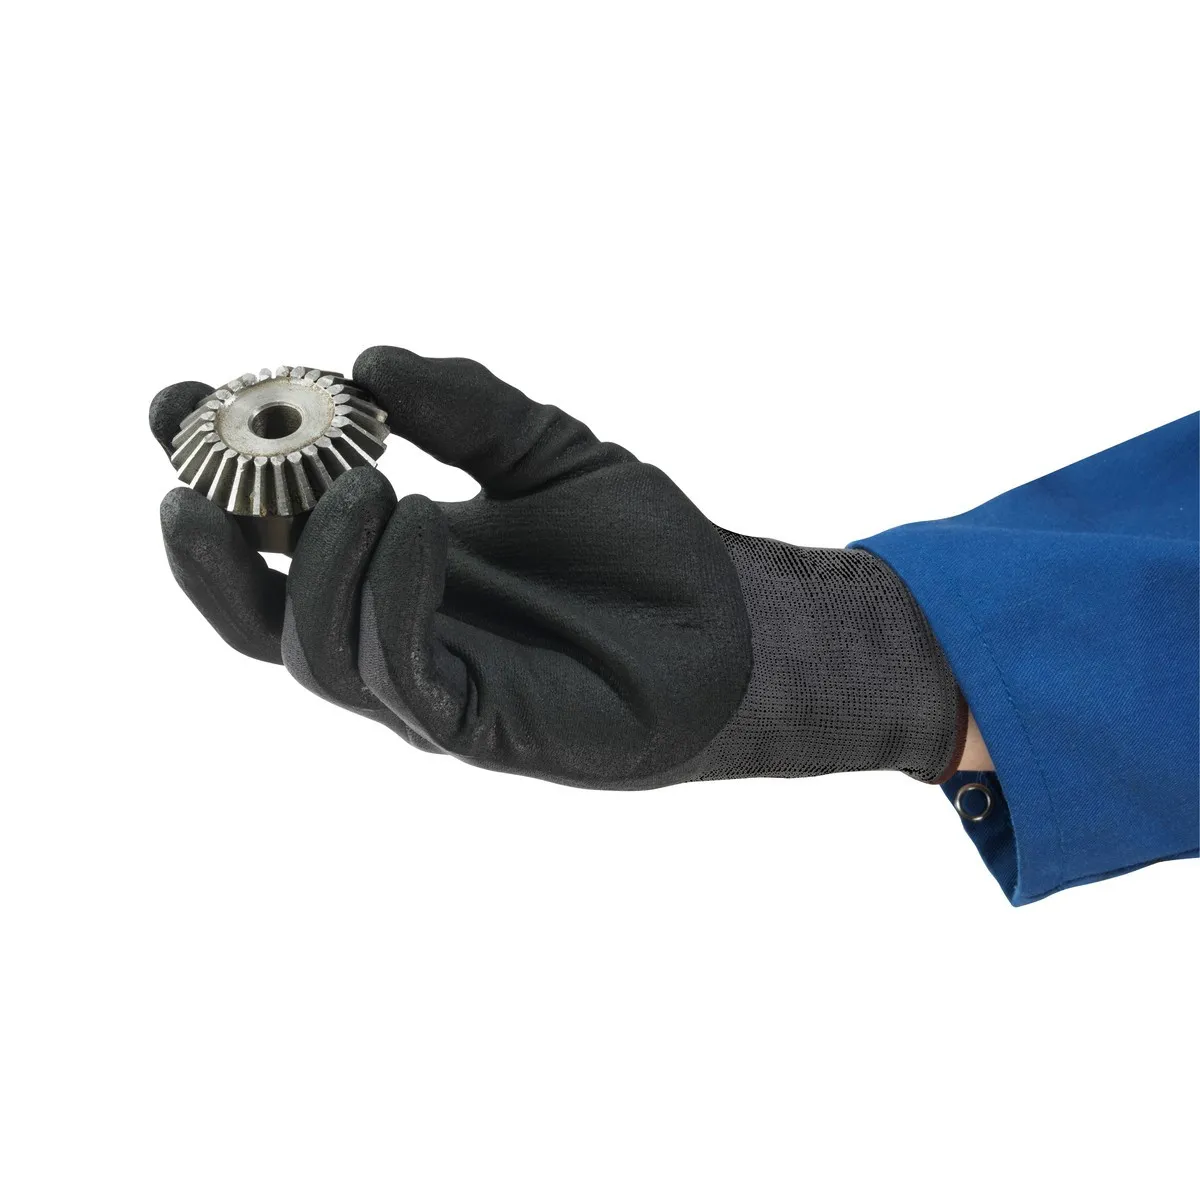 Zaštitne rukavice HYFLEX 11-840 sive - Ansell - PAR 